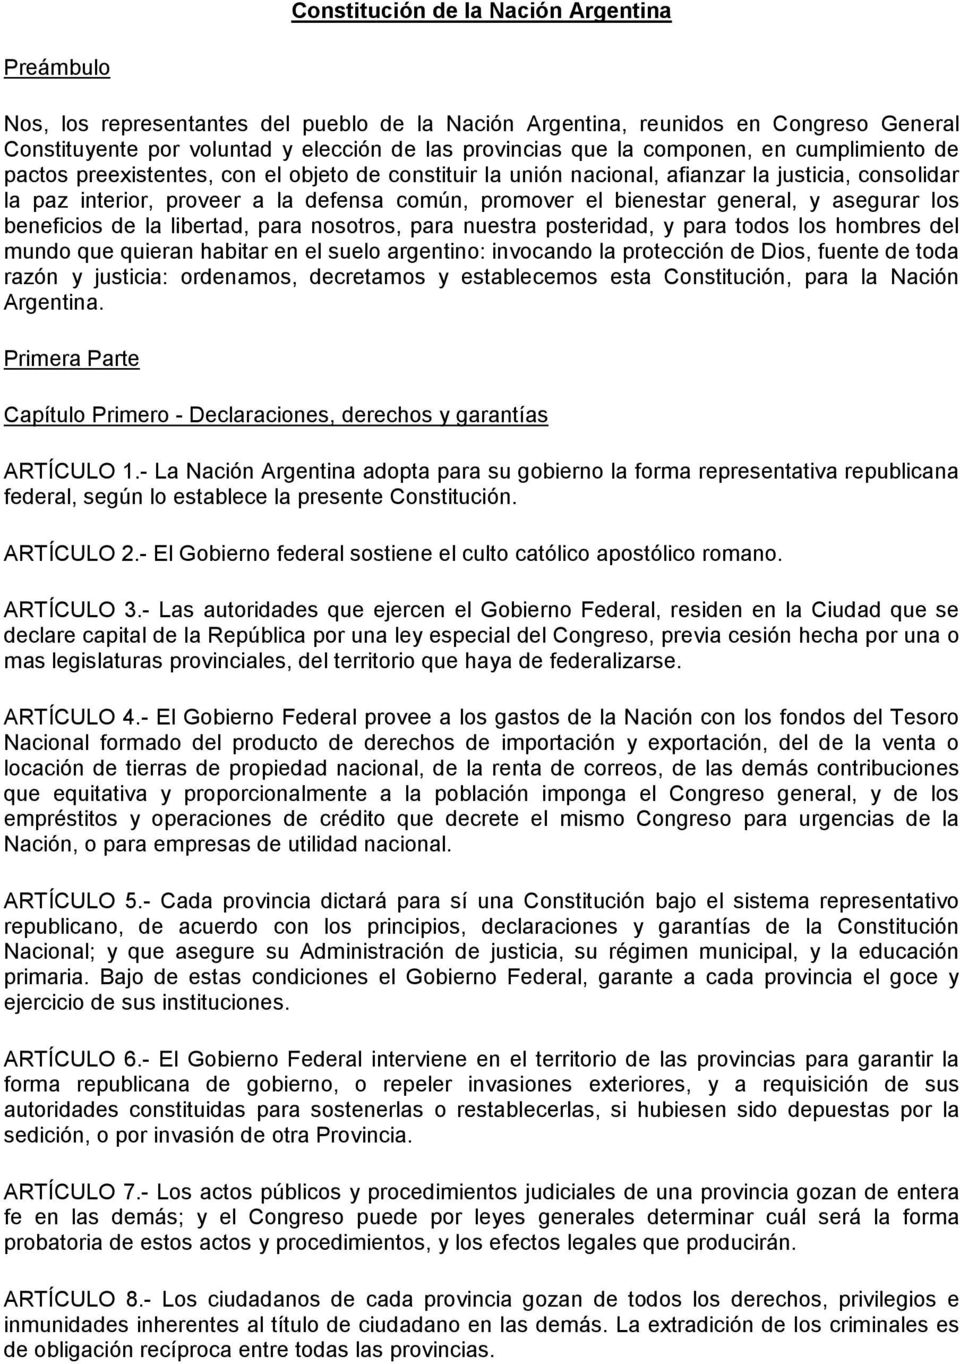 Constitucion De La Nacion Argentina Pdf Free Download